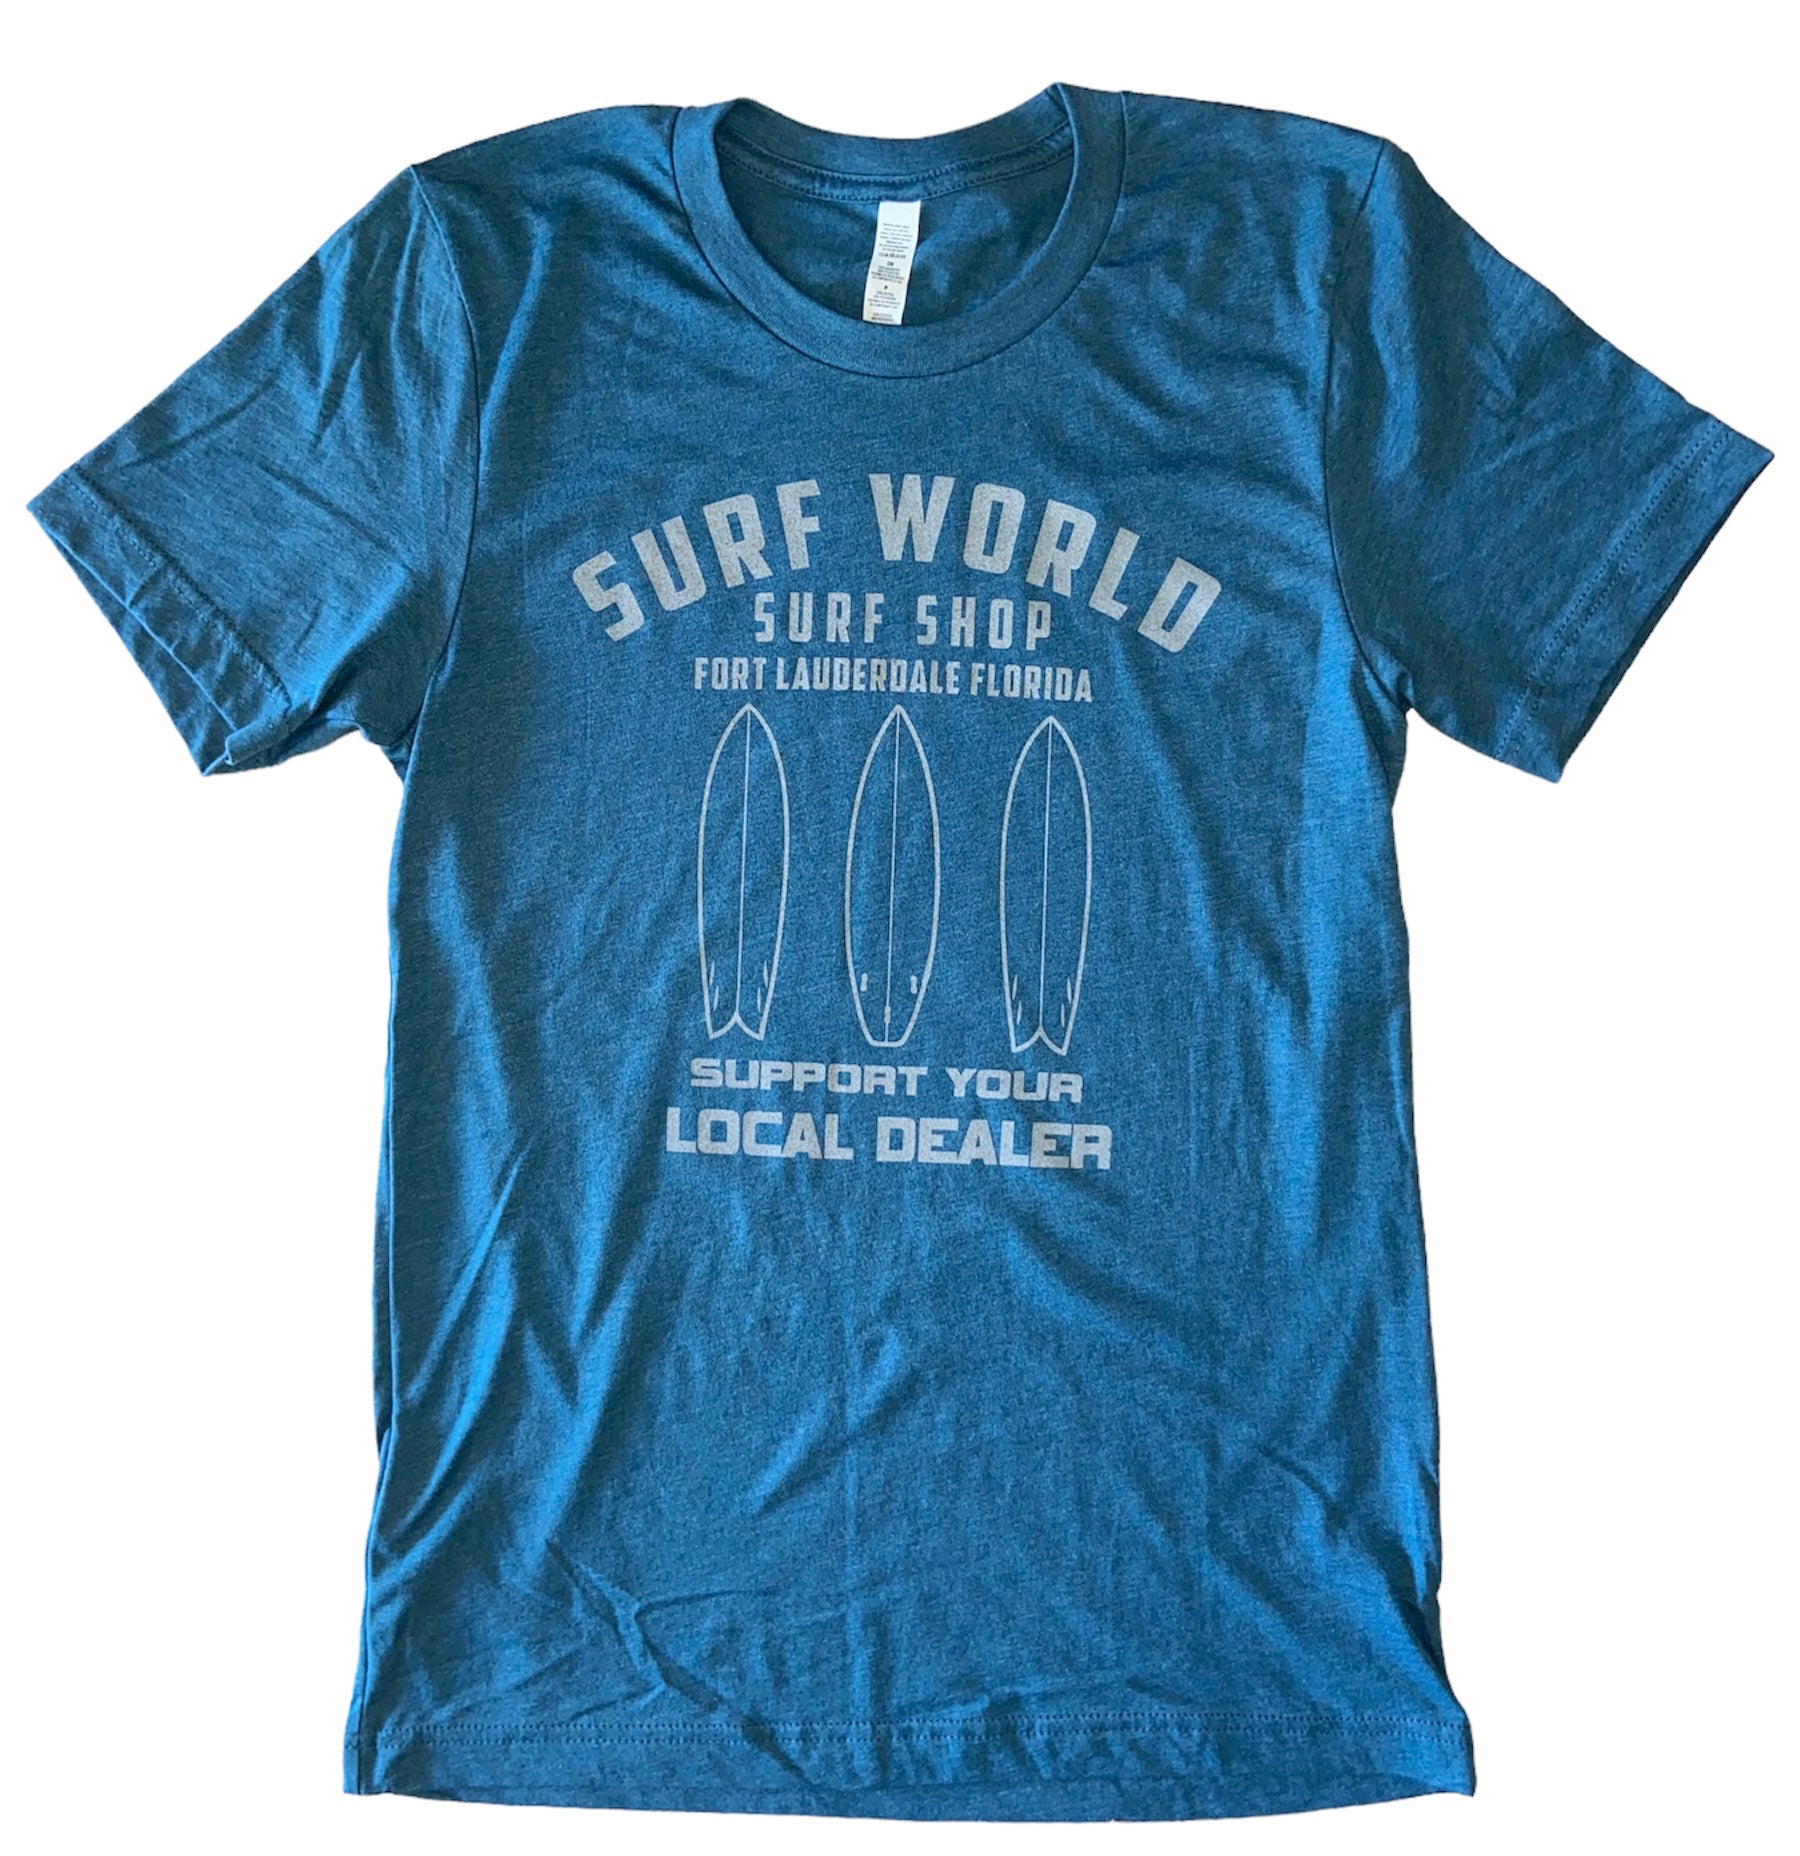 Surf World Support Your Local Dealer Tee Shirt - Heather Teal Mens T Shirt